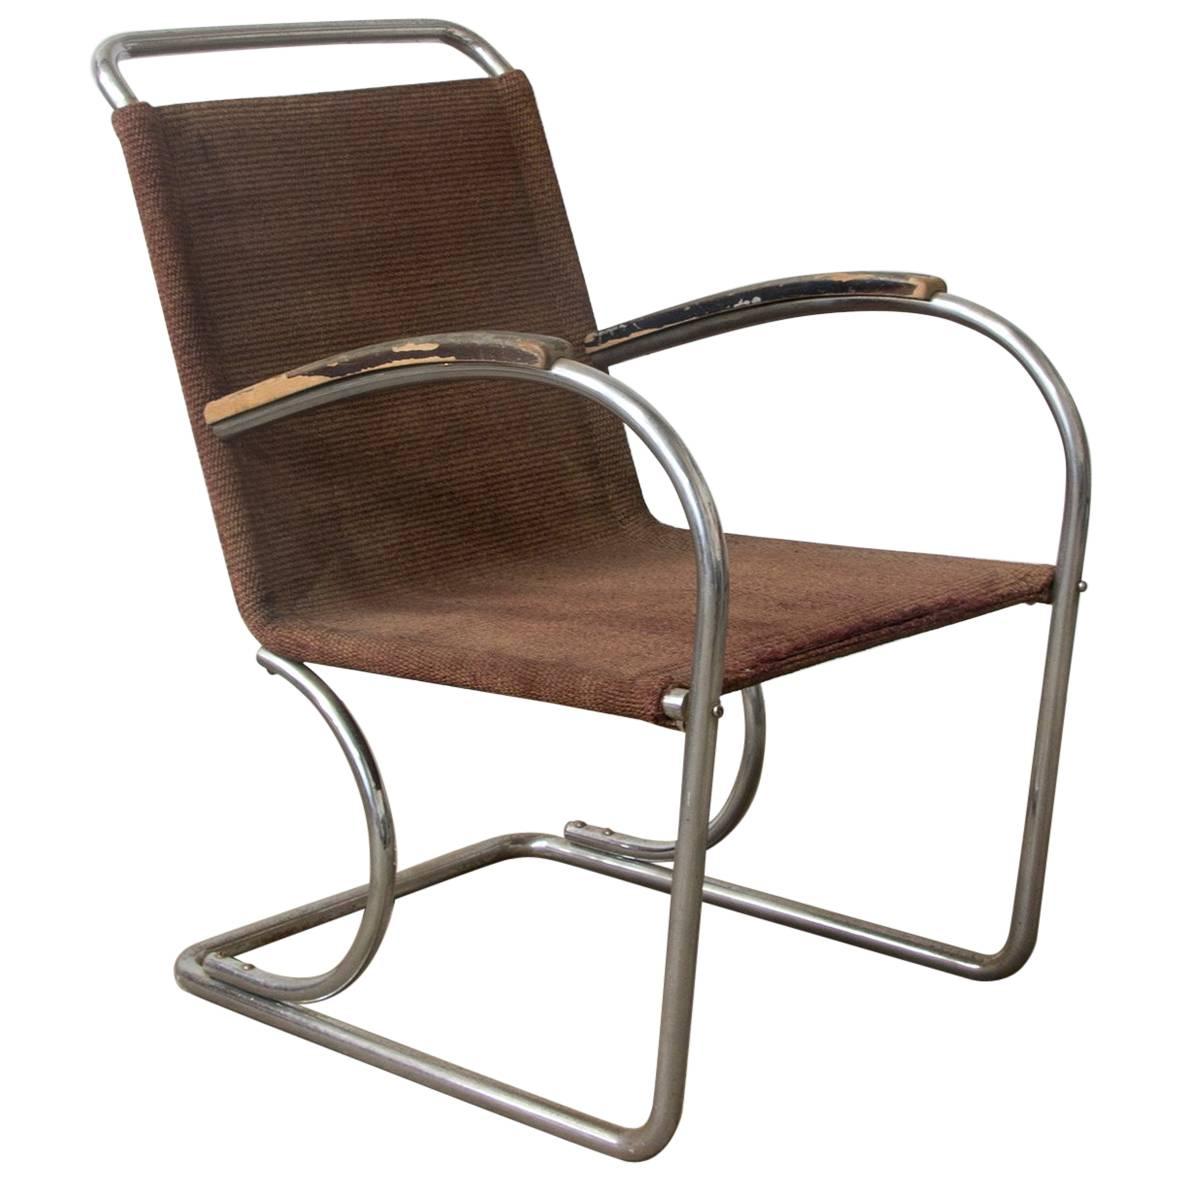 Circa 1930, Original, Early Tubular Easy Chair with Original Robe Woven Seat